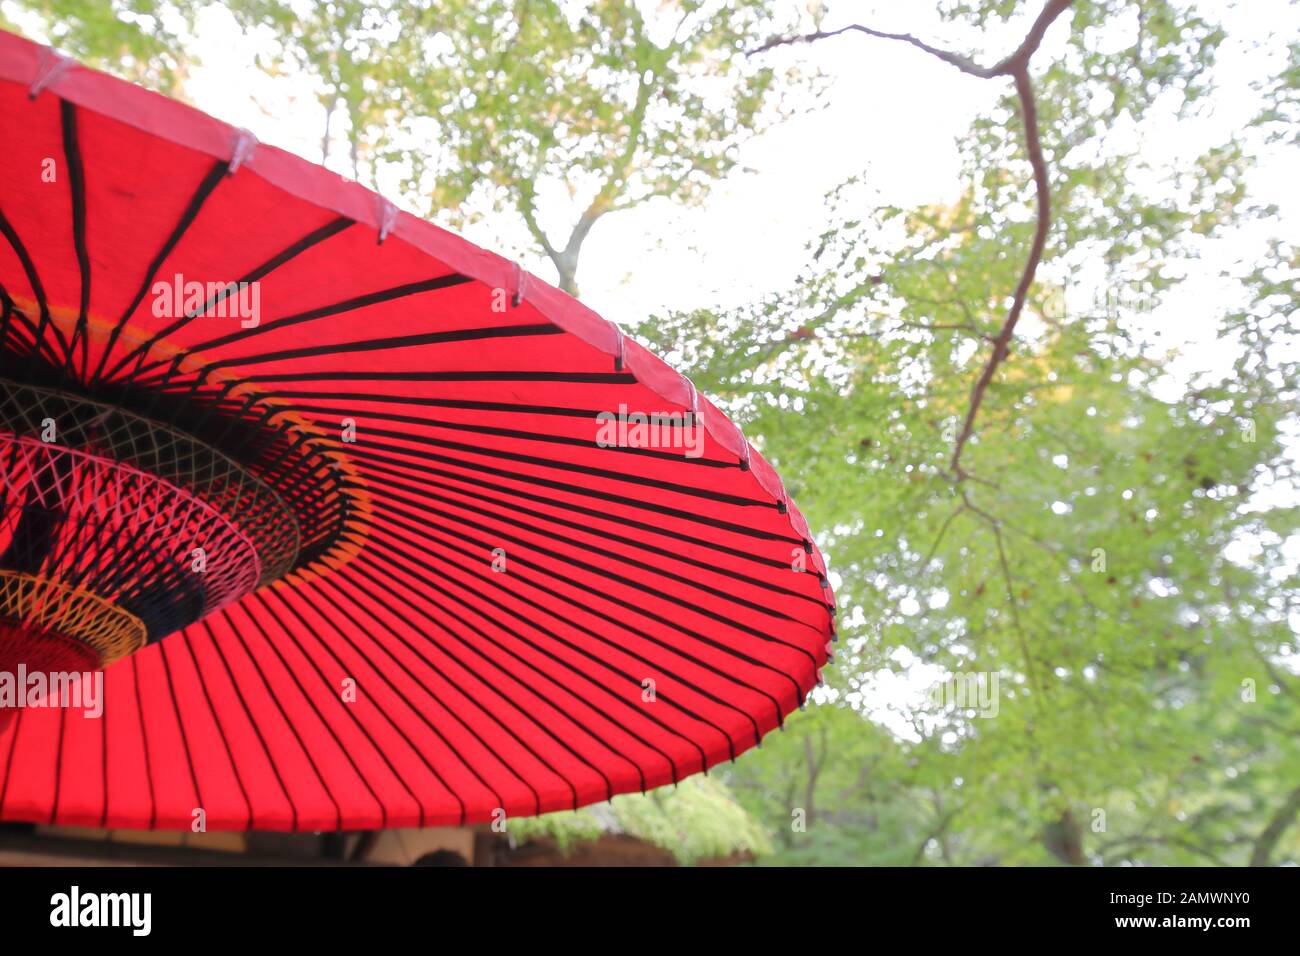 Japanese traditional red parasol umbrella Japan Stock Photo